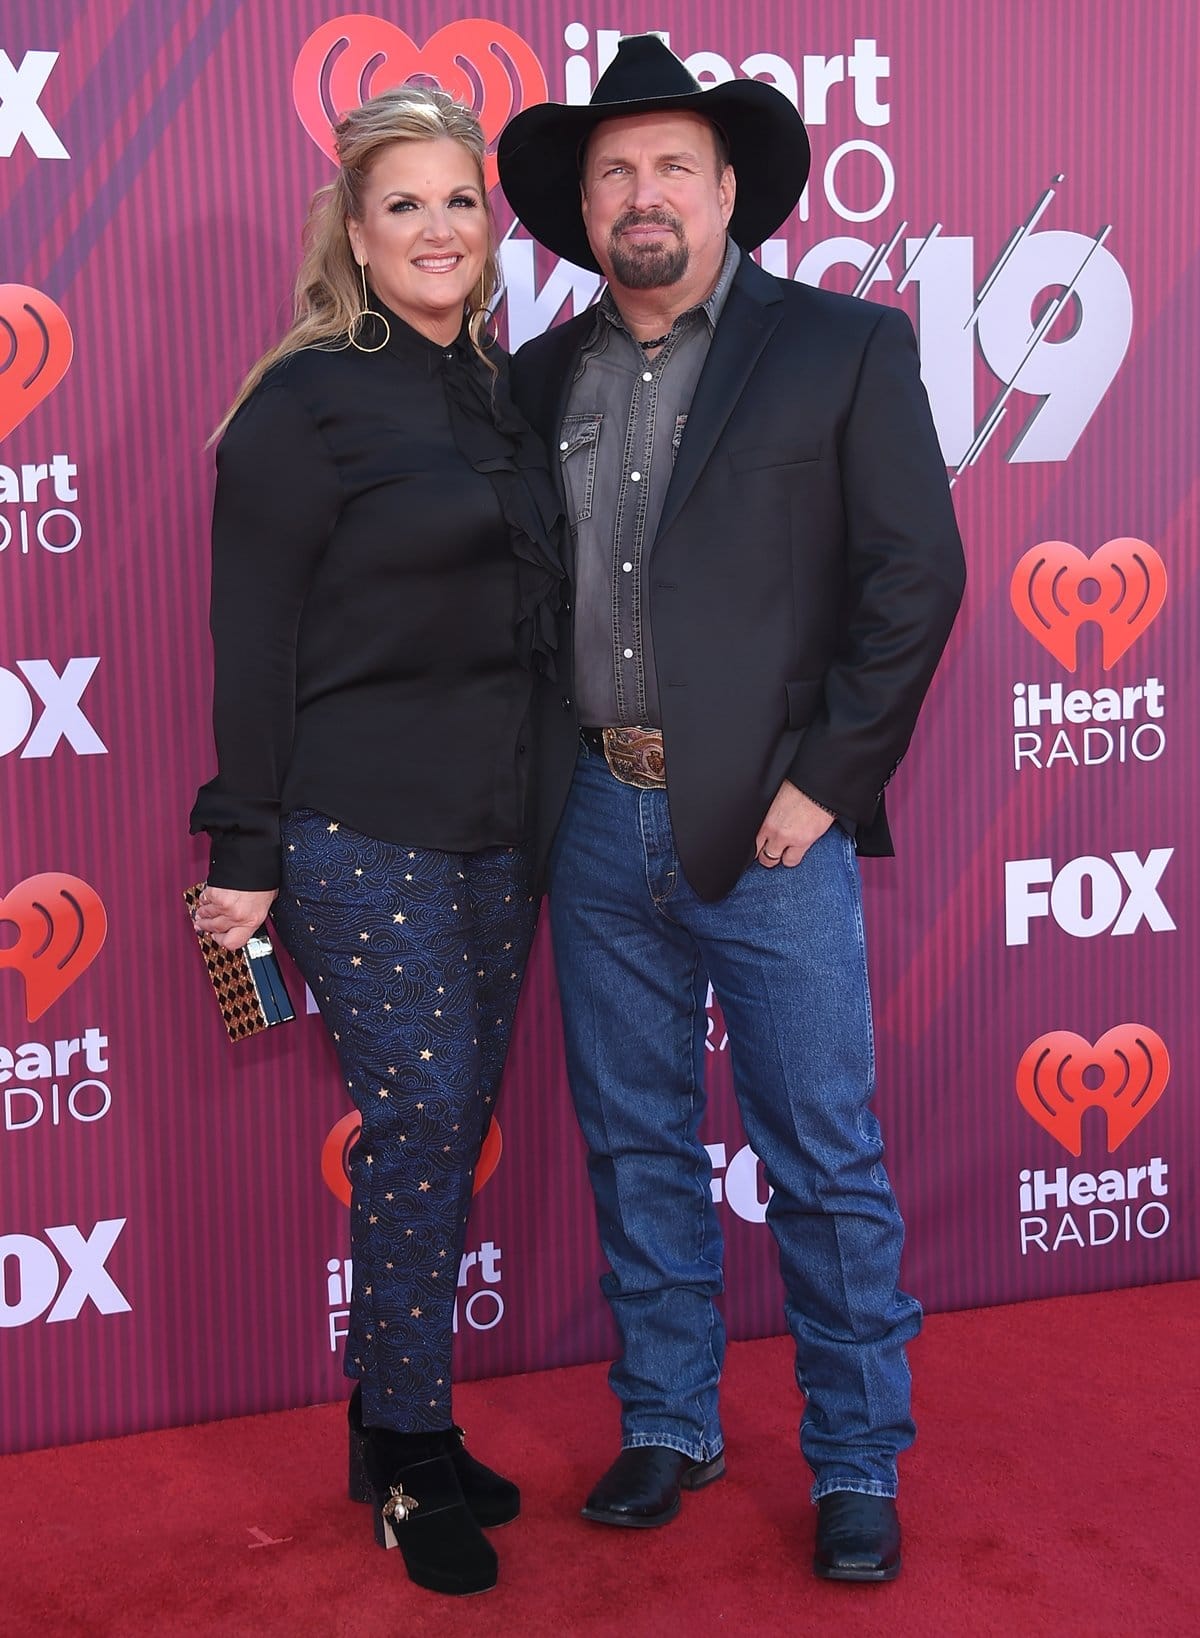 Trisha Yearwood and her husband Garth Brooks arrive for the iHeart Radio Music Awards 2019